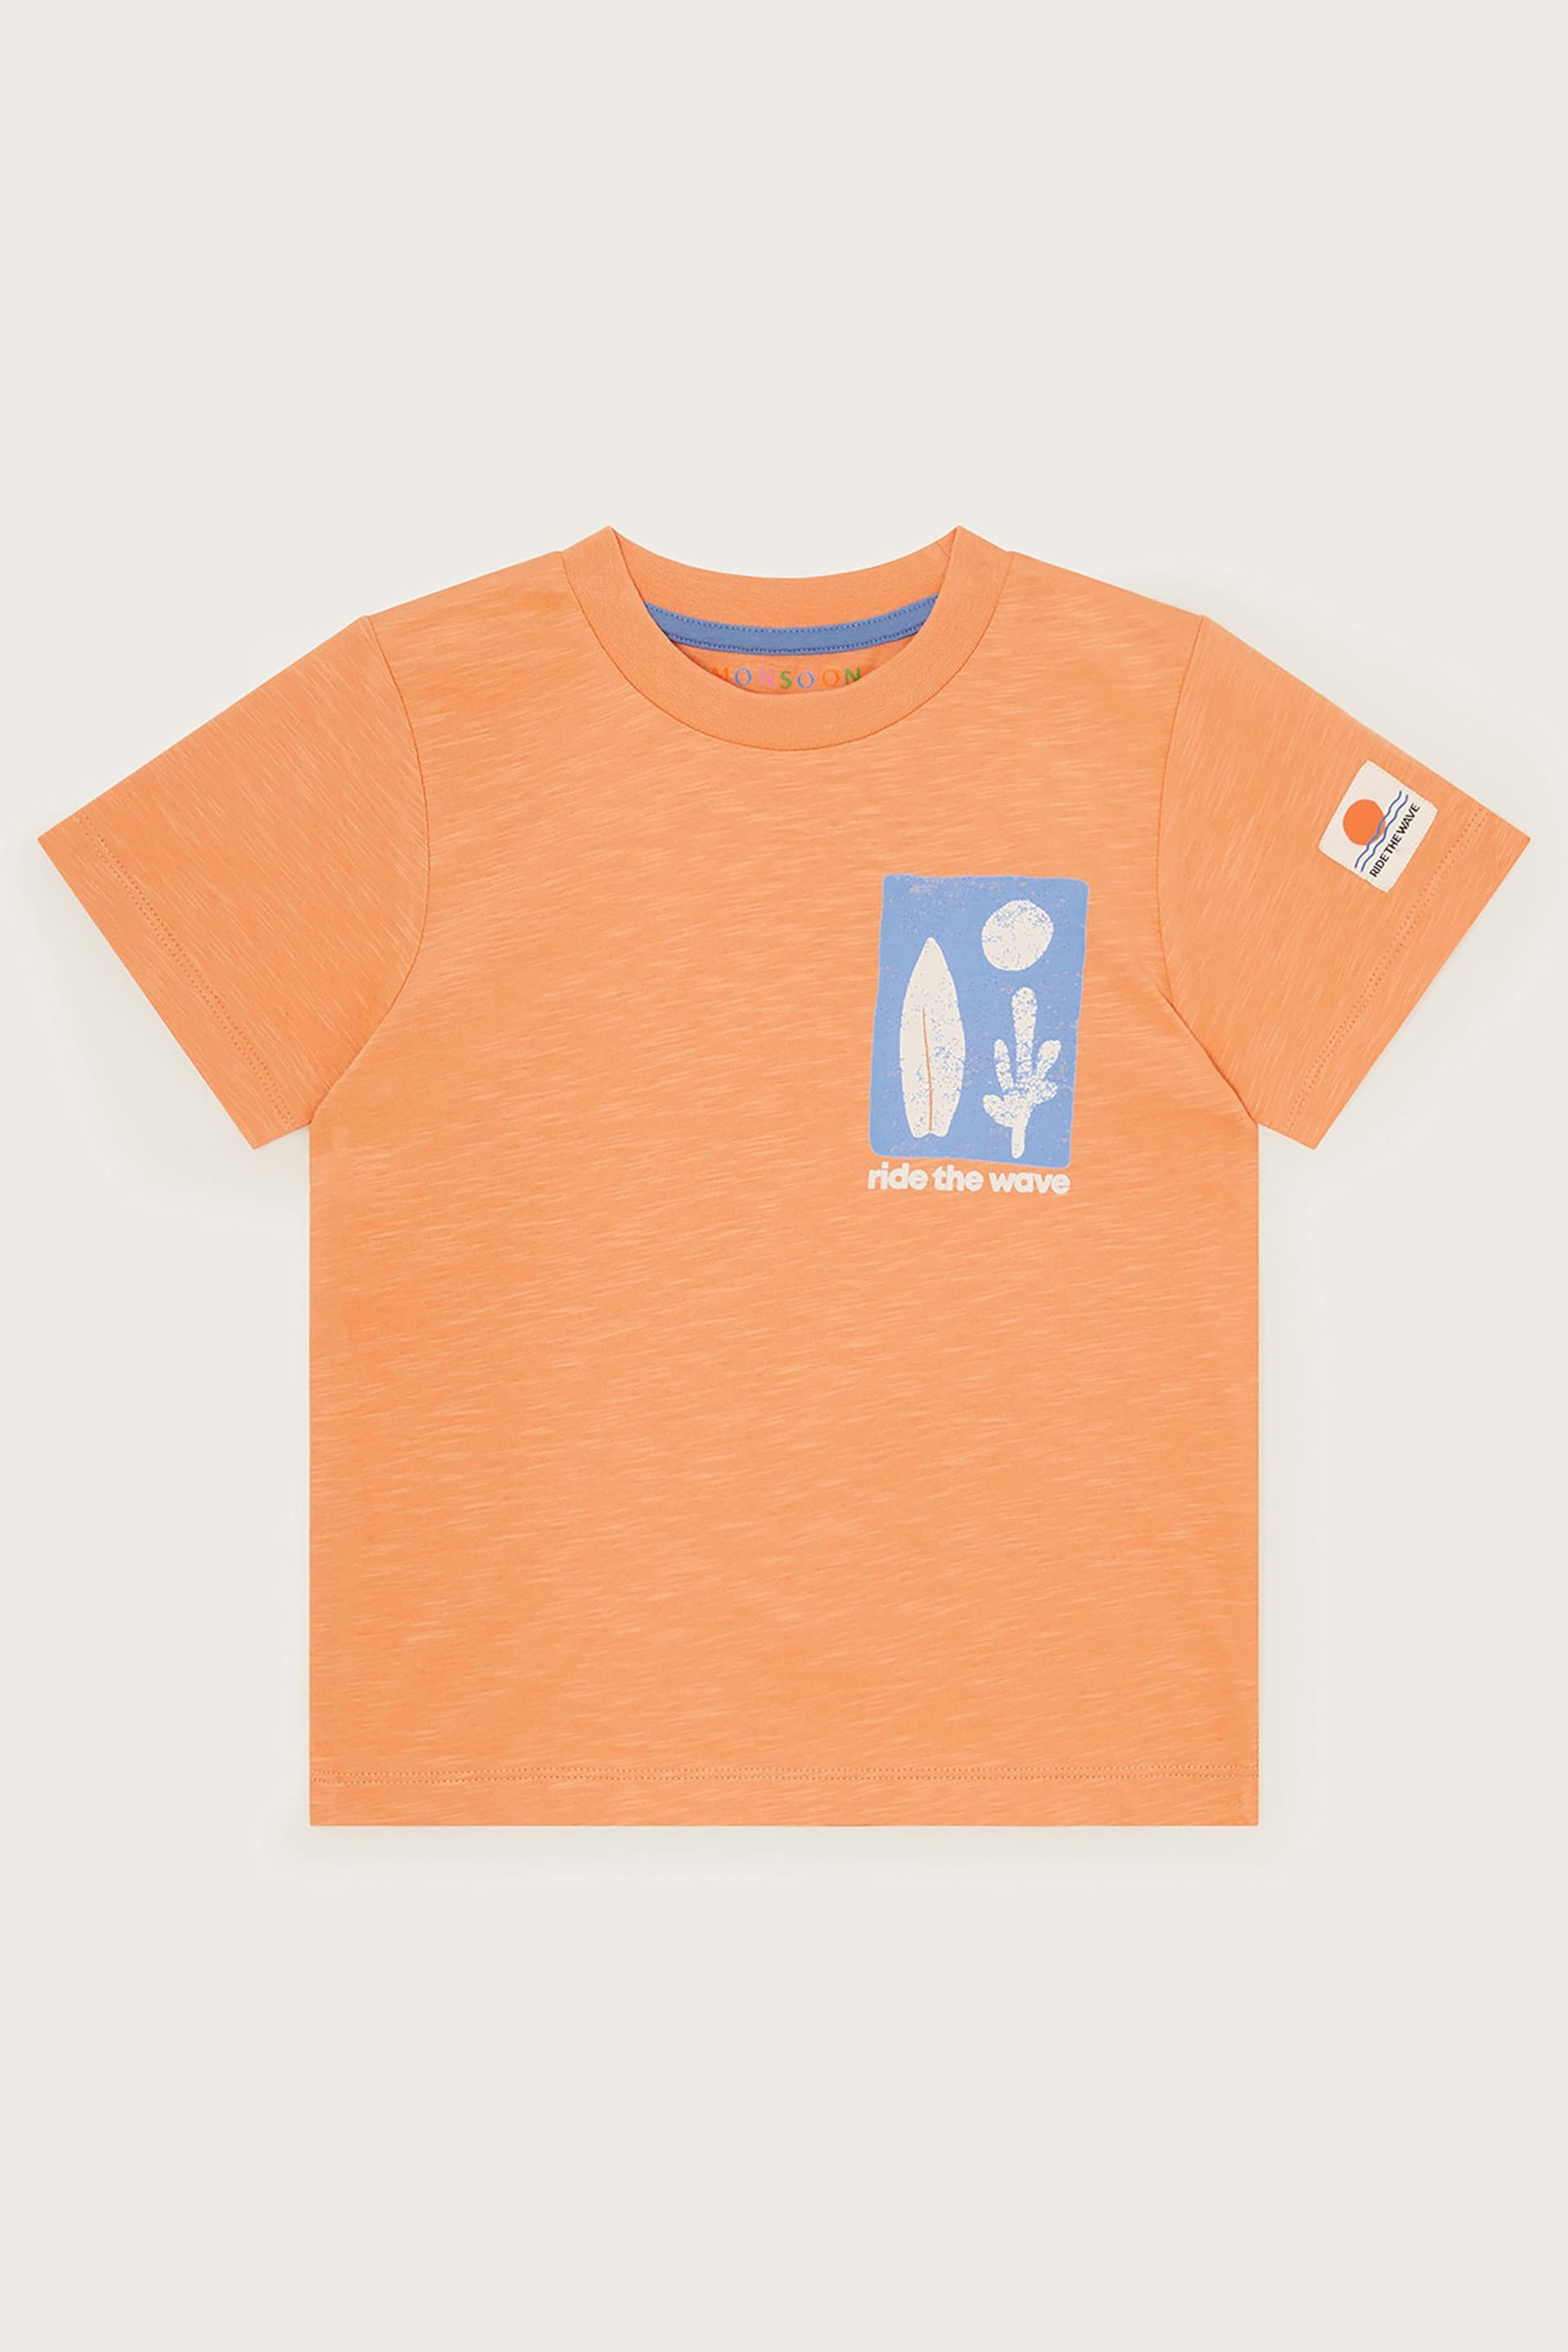 Monsoon Orange Surf Print T-Shirt - Image 1 of 3